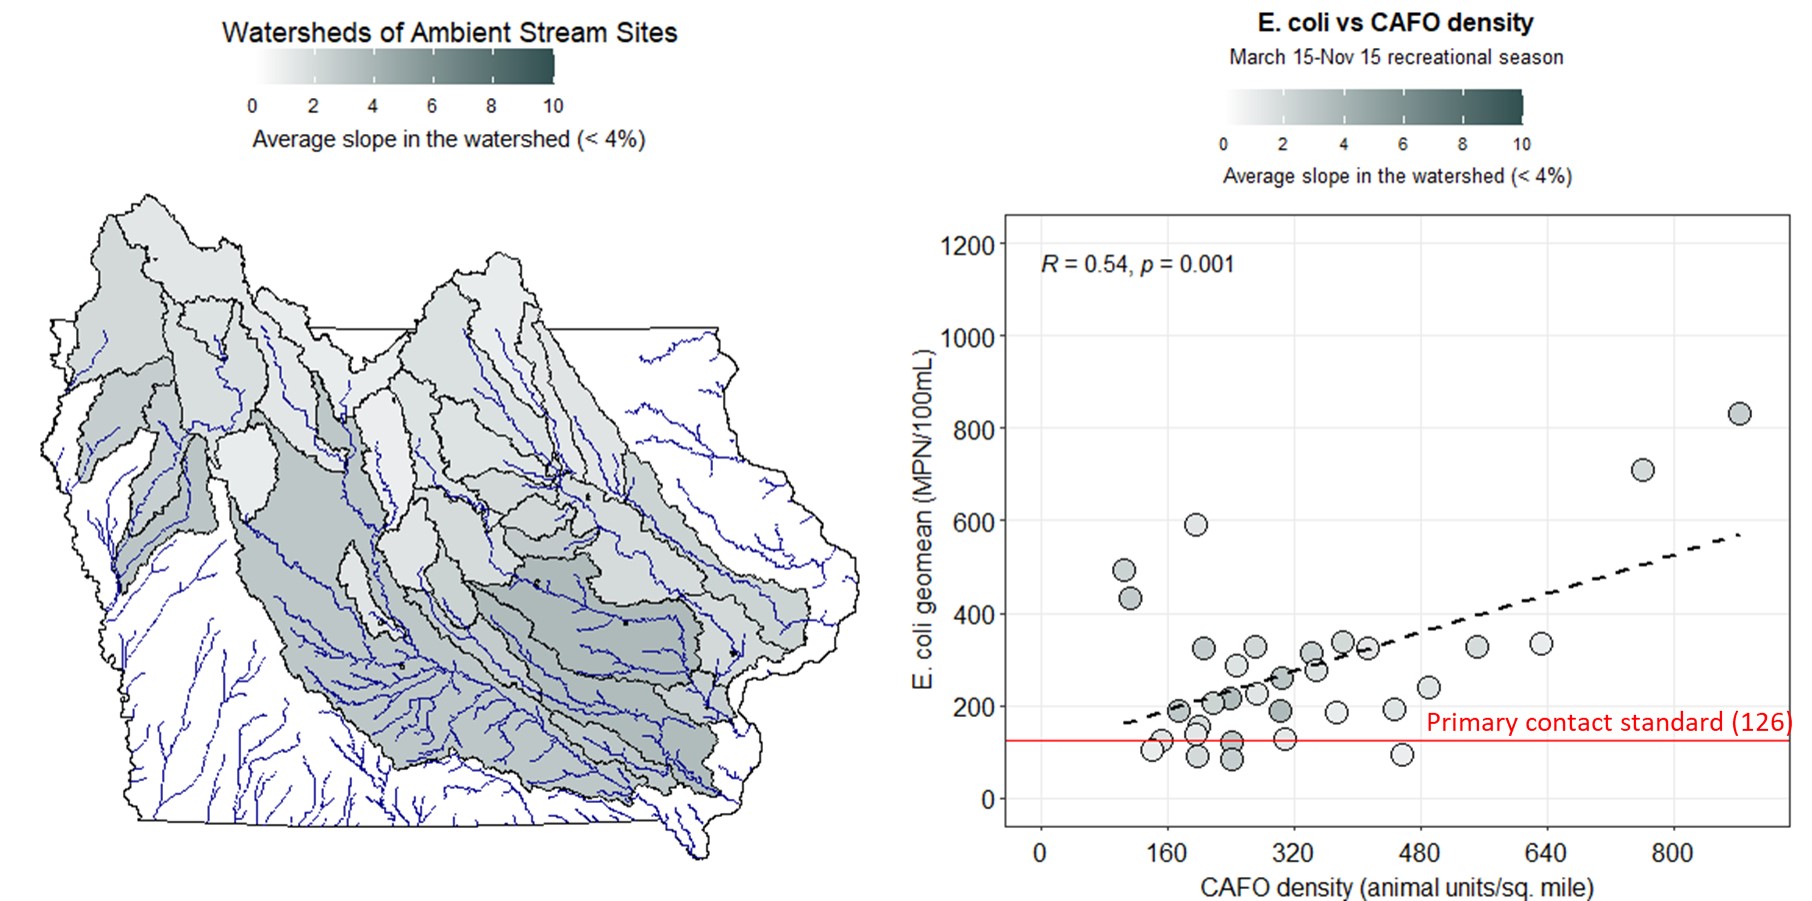 E. coli vs livestock density for sites with less than 4% slope